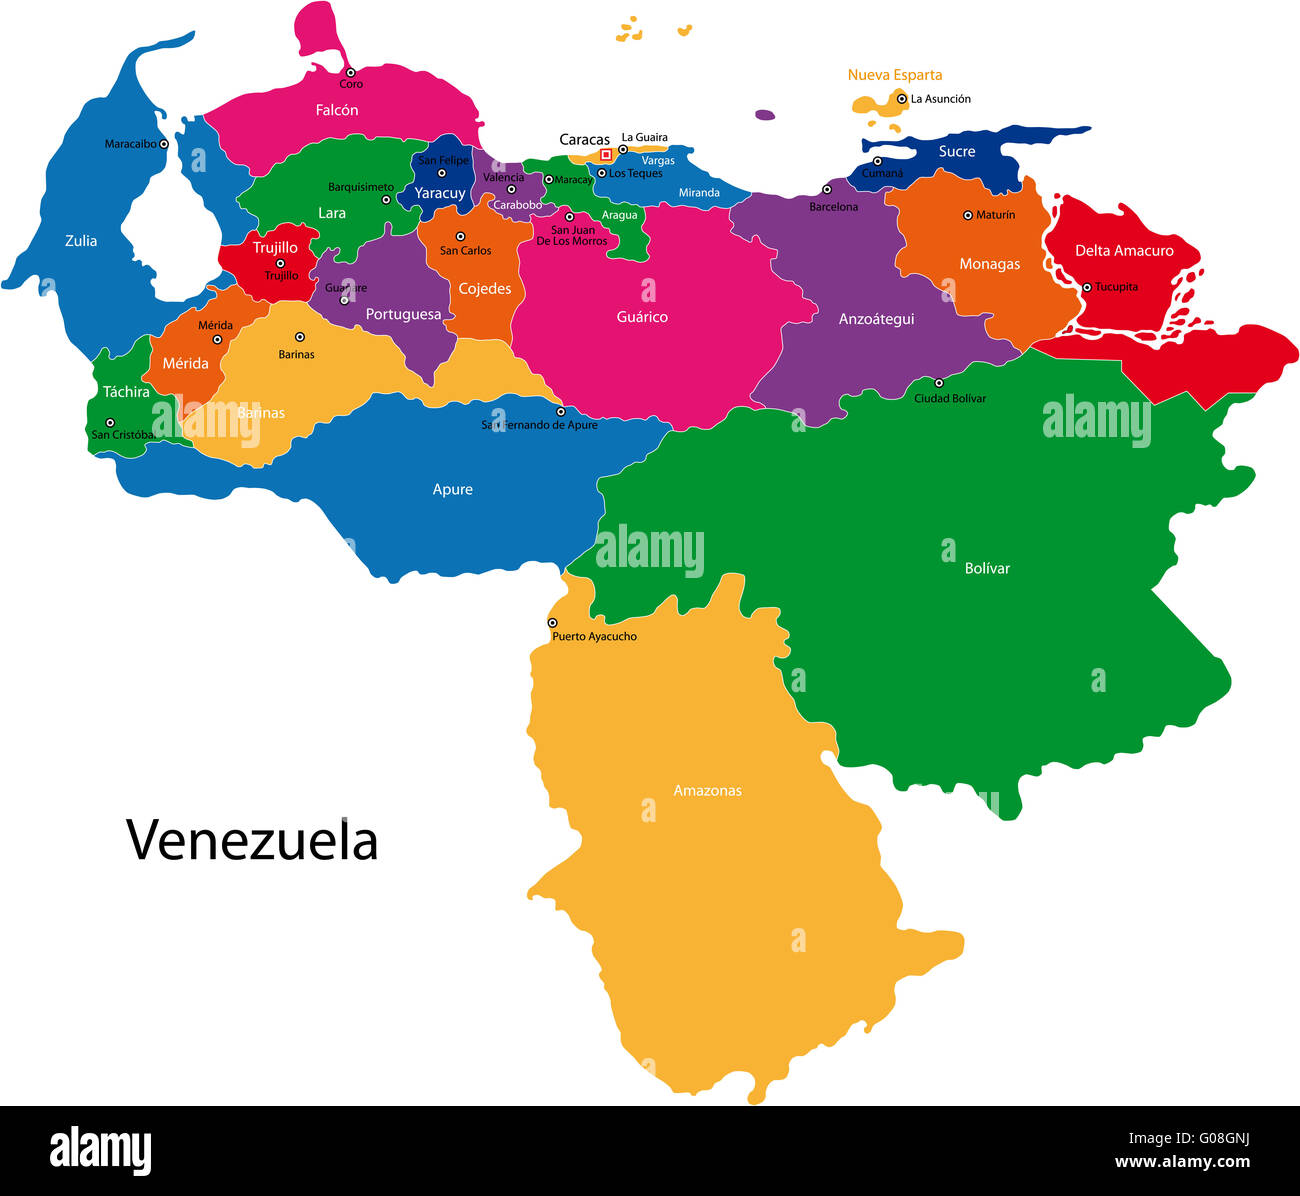 Venezuela map Stock Photo